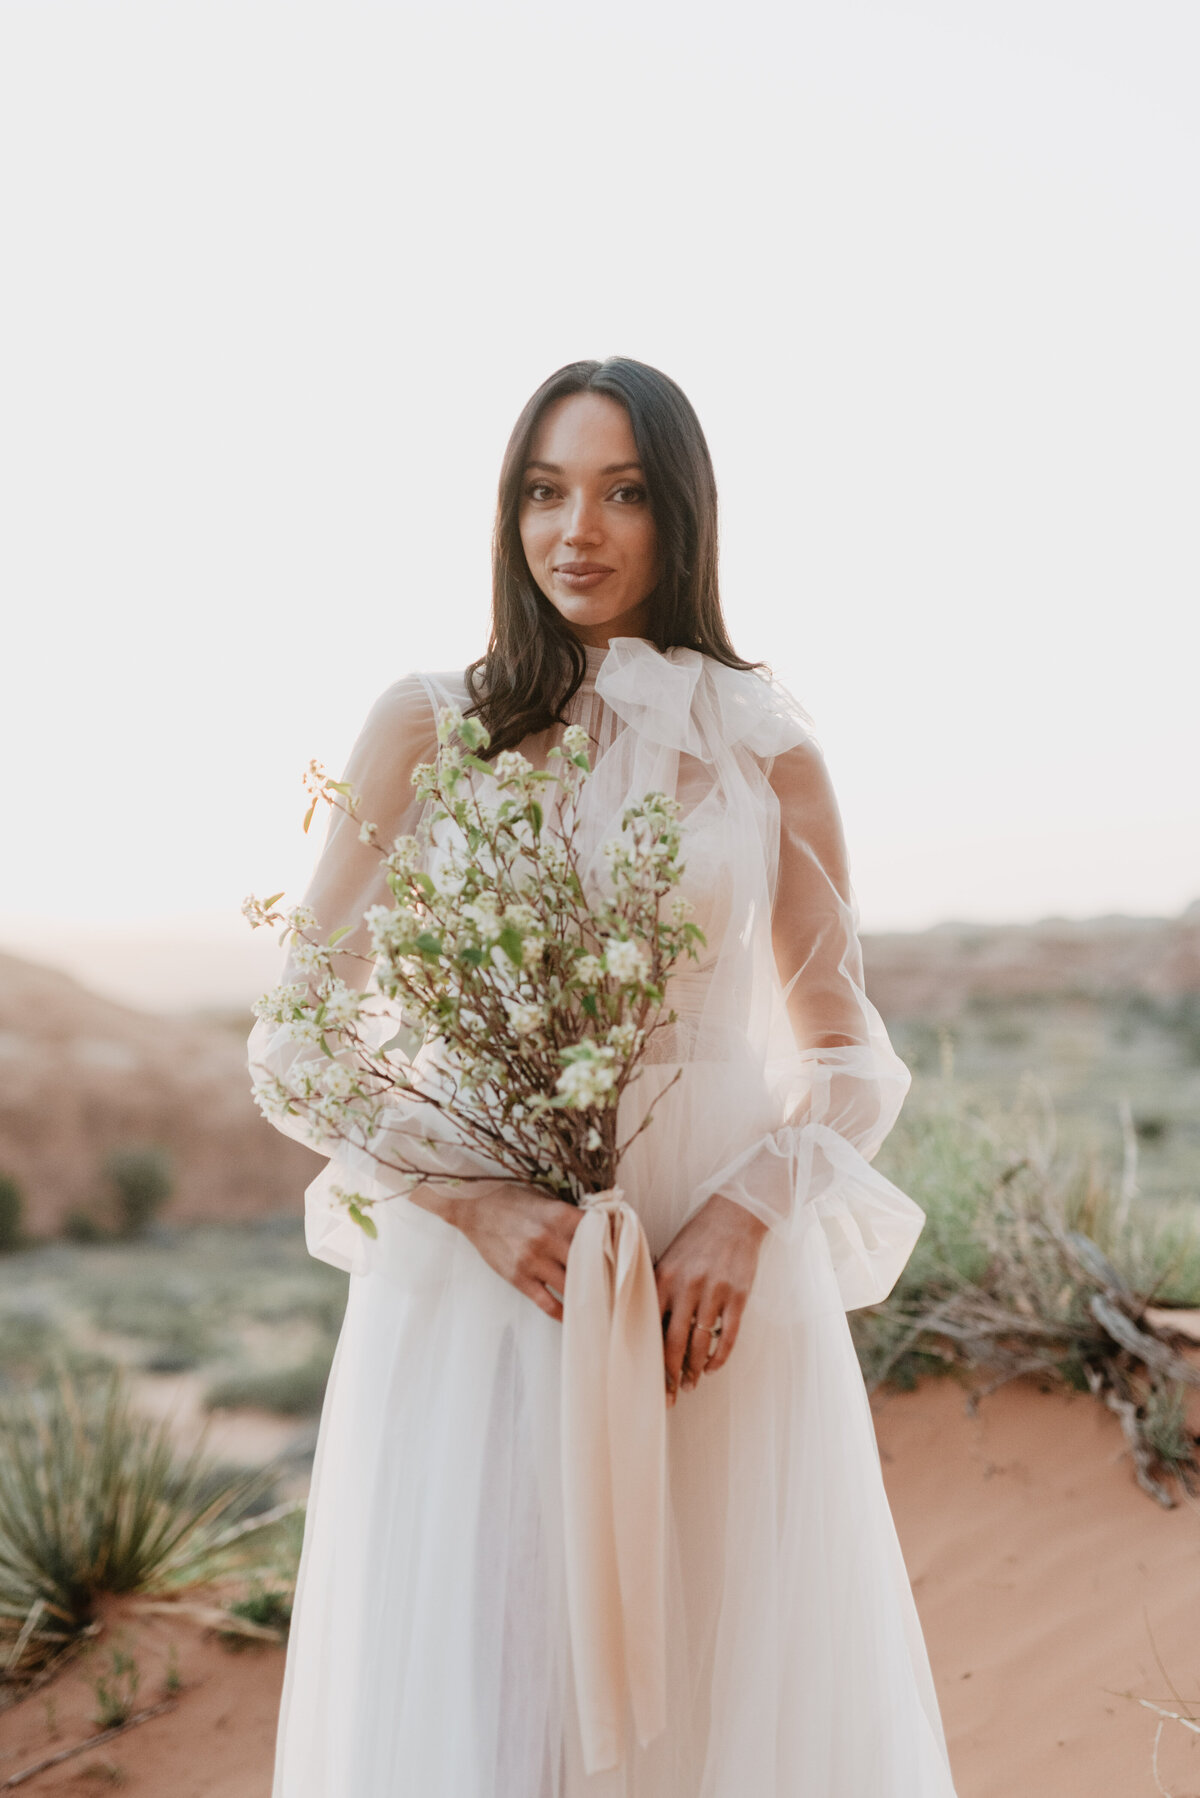 Utah elopement photographer captures bride holding bouquet and smiling